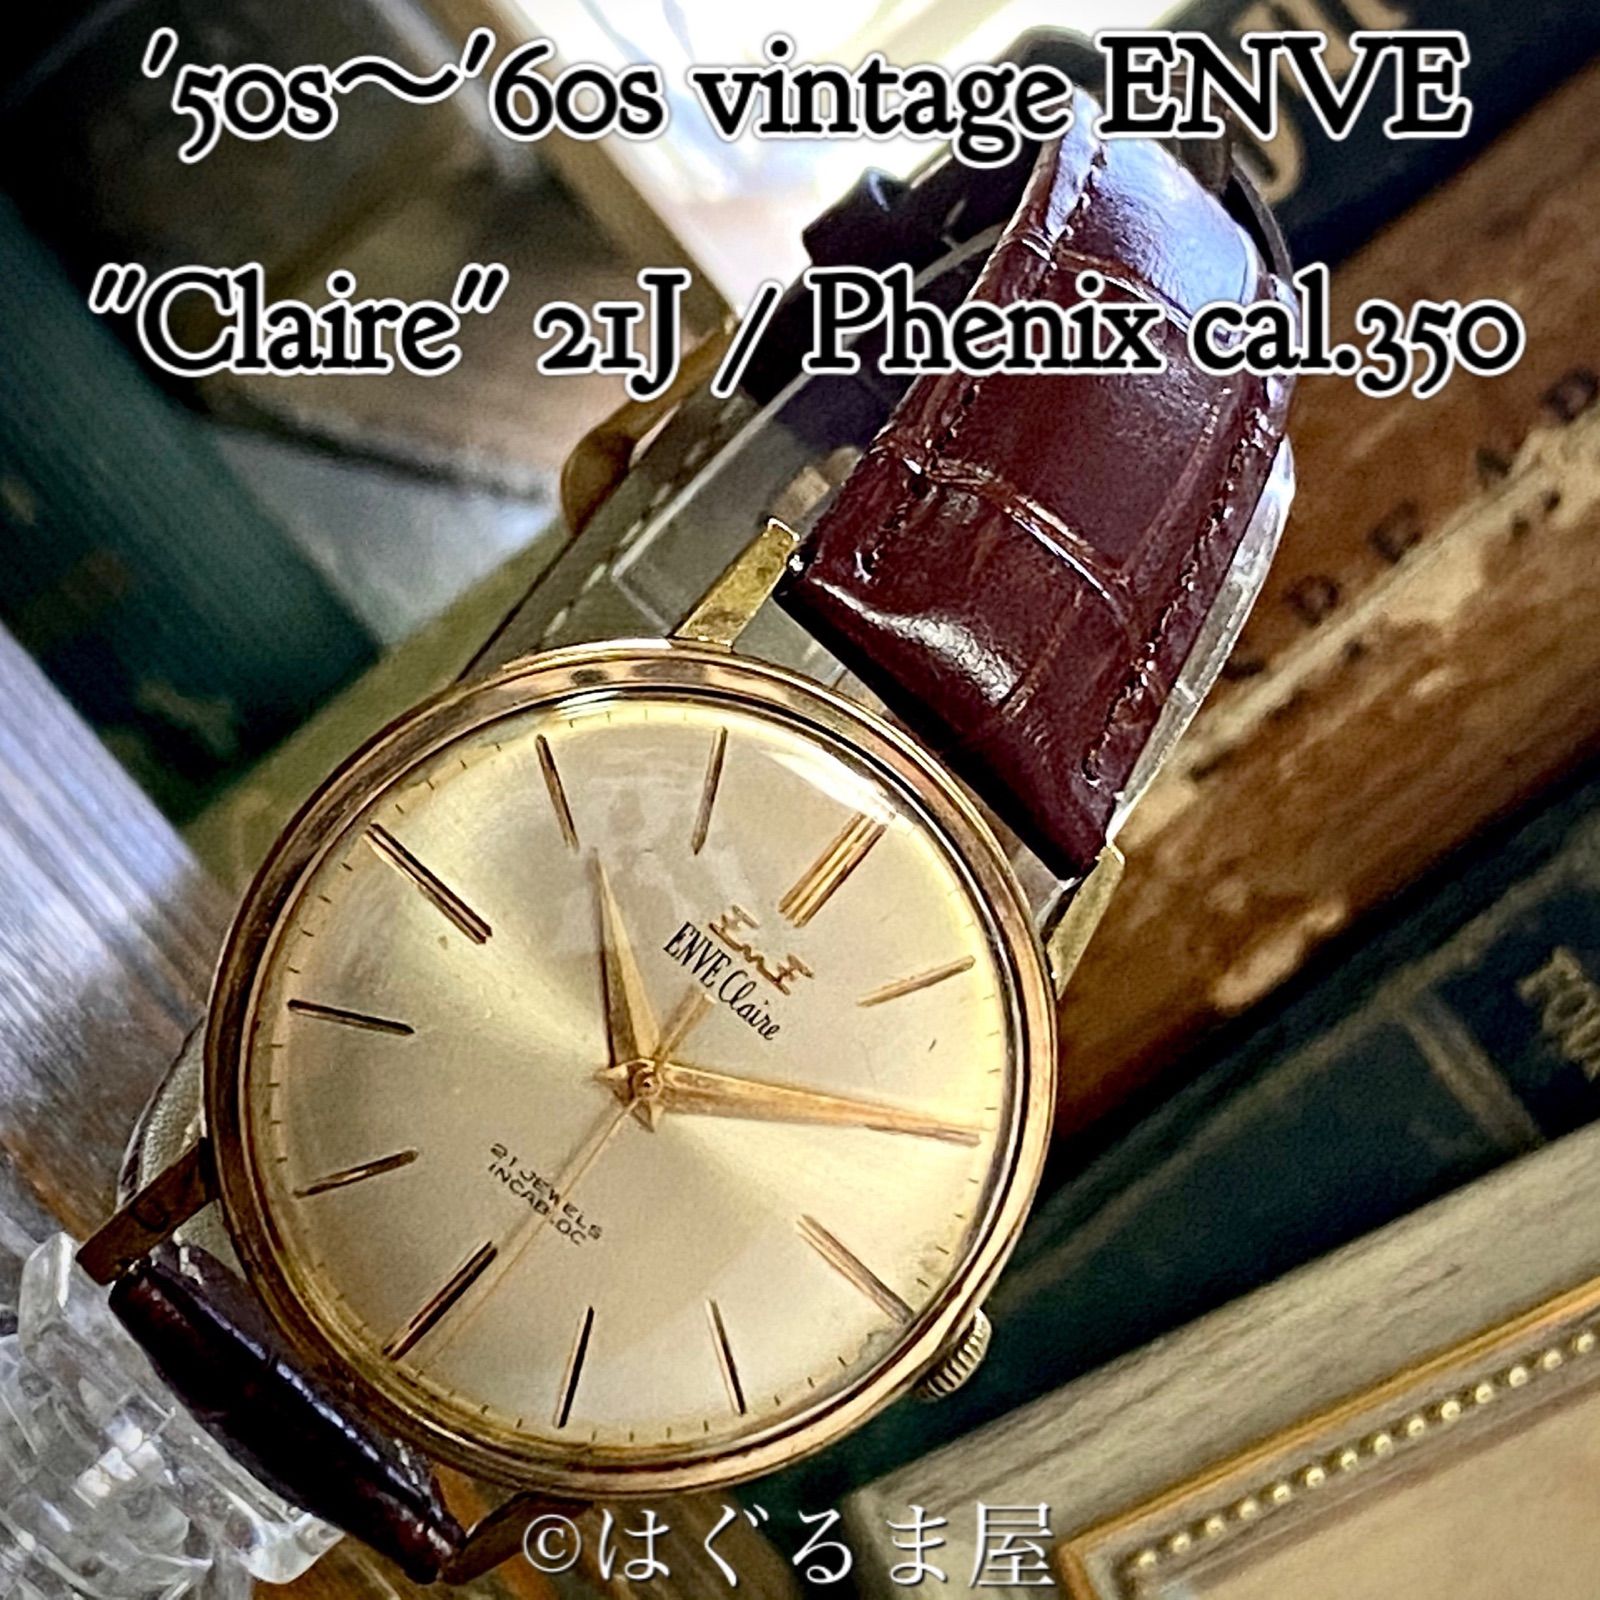 50〜60s vintage ENVE Claire 手巻 ゴールド OH済み - メルカリ